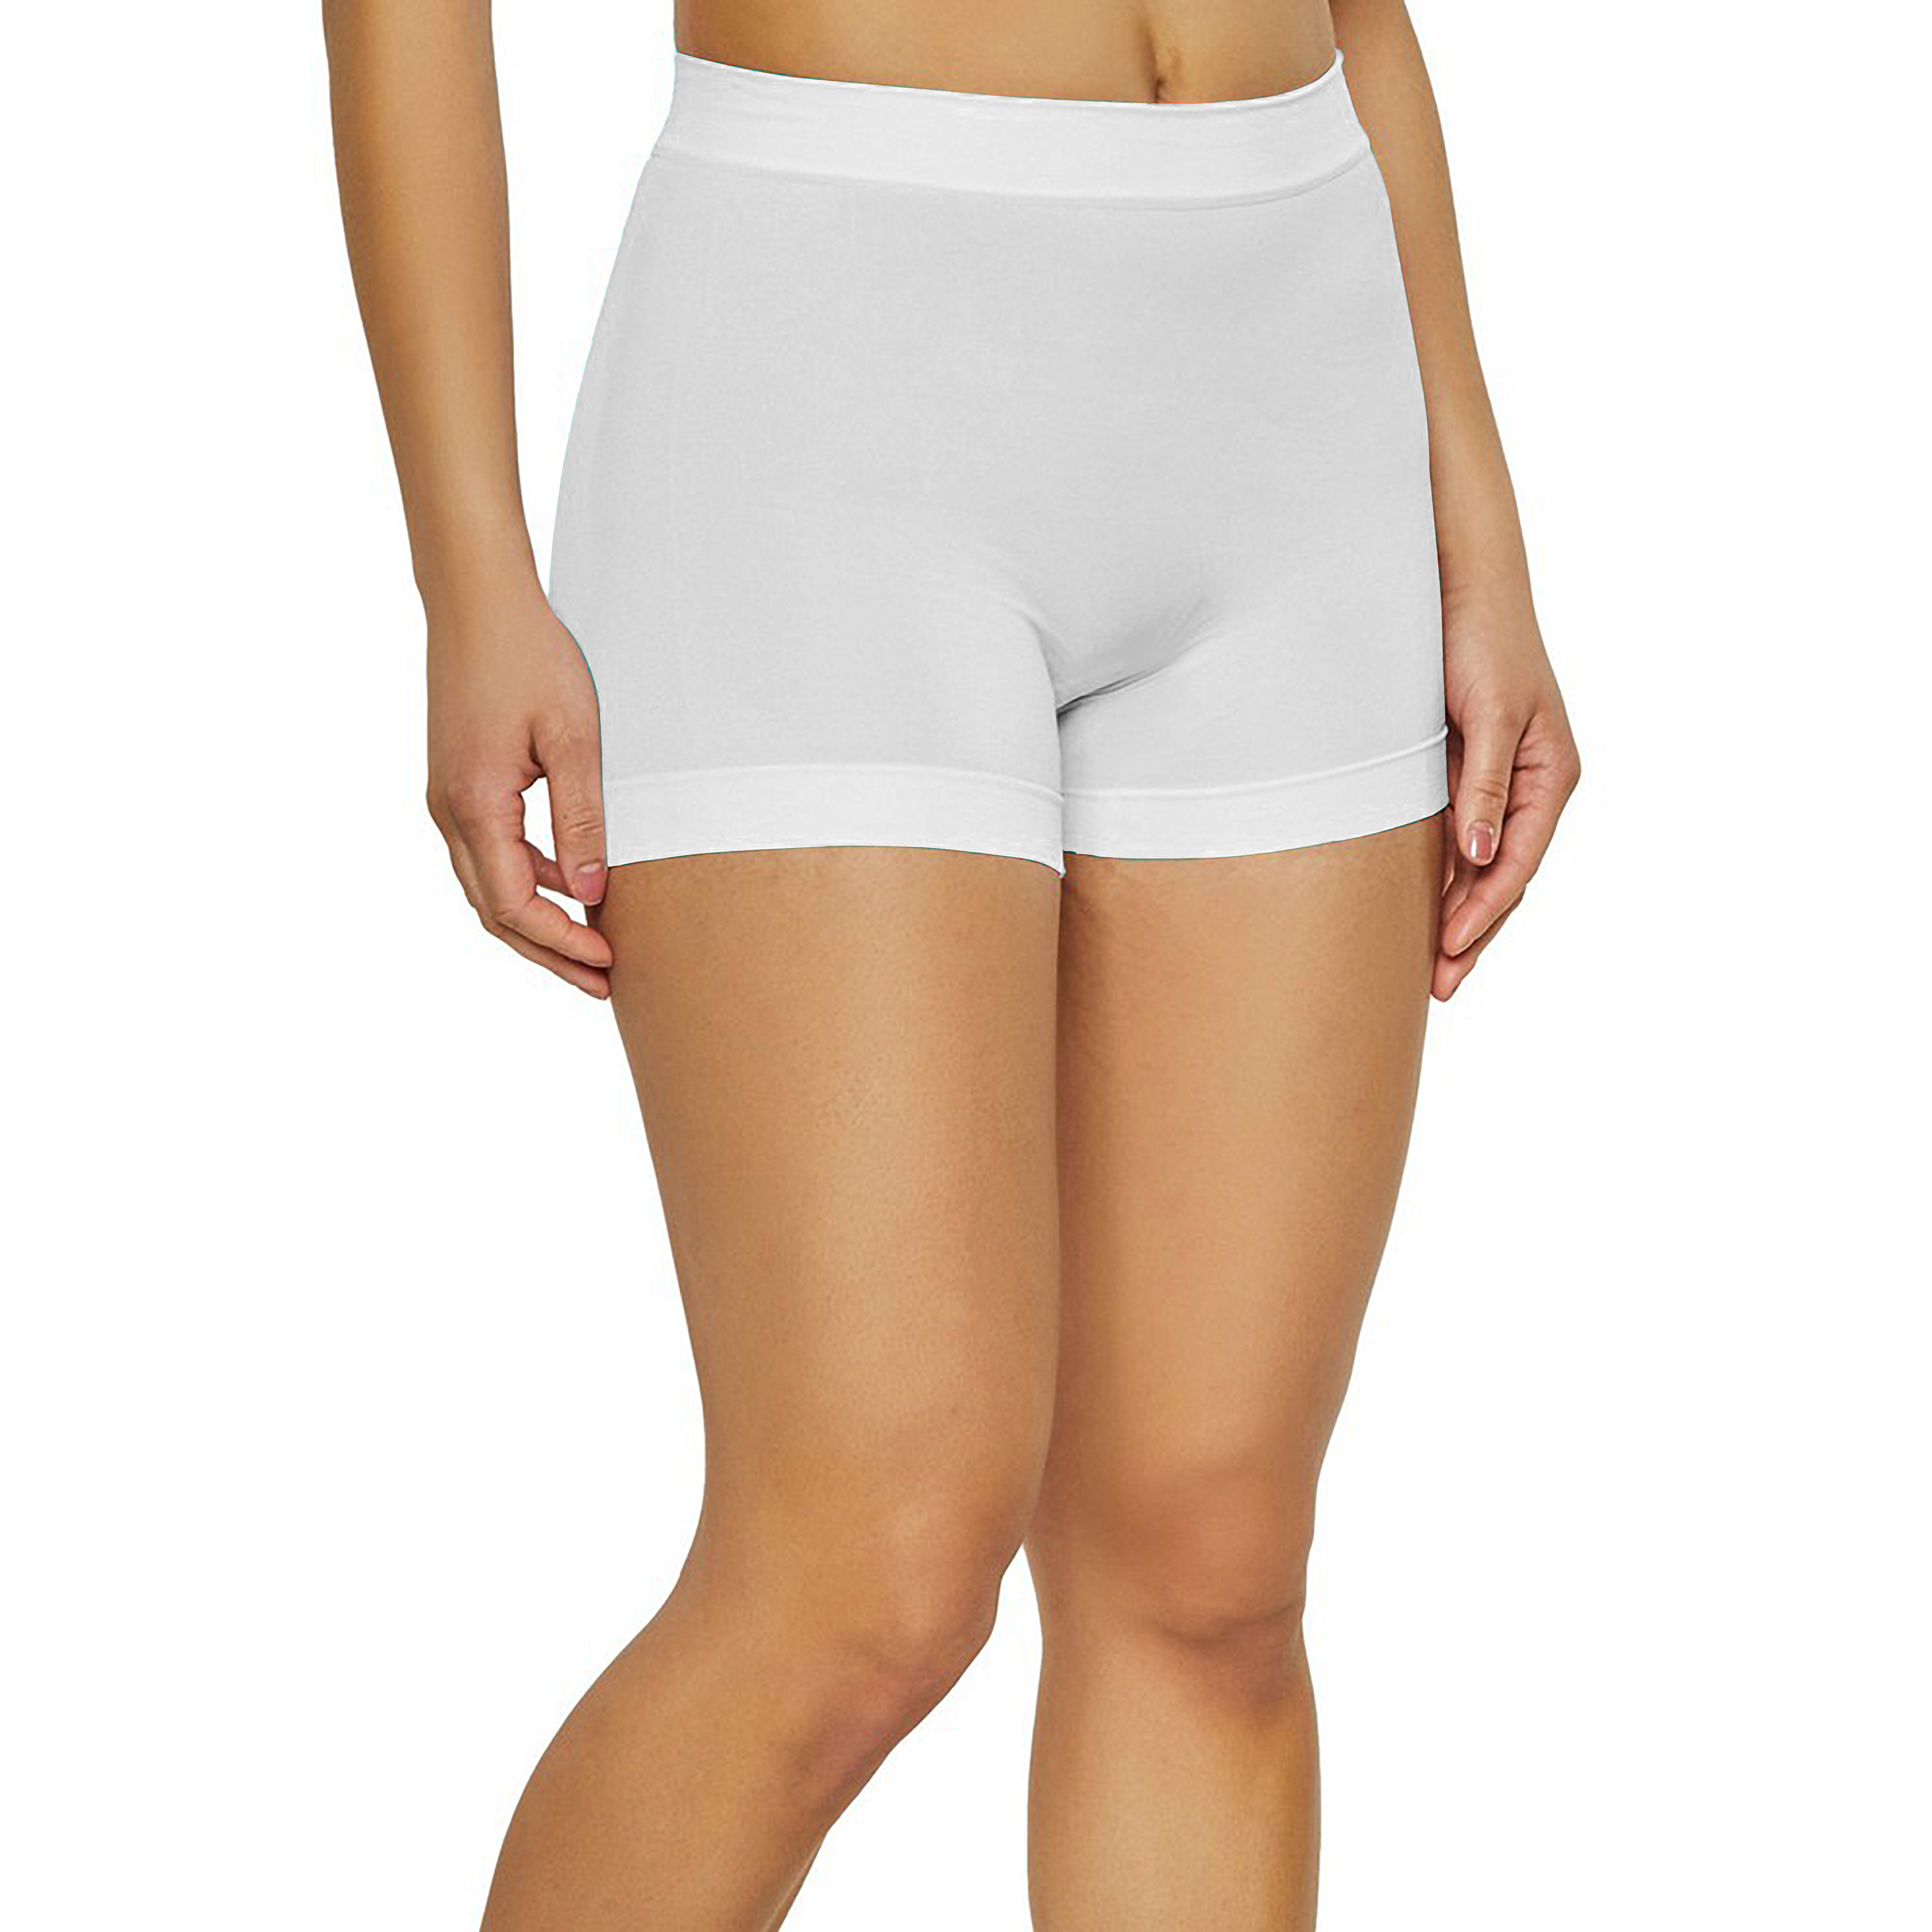 5-Pack Women's High Waisted Biker Bottom Shorts - Yoga Gym Running Ladies Pants - L